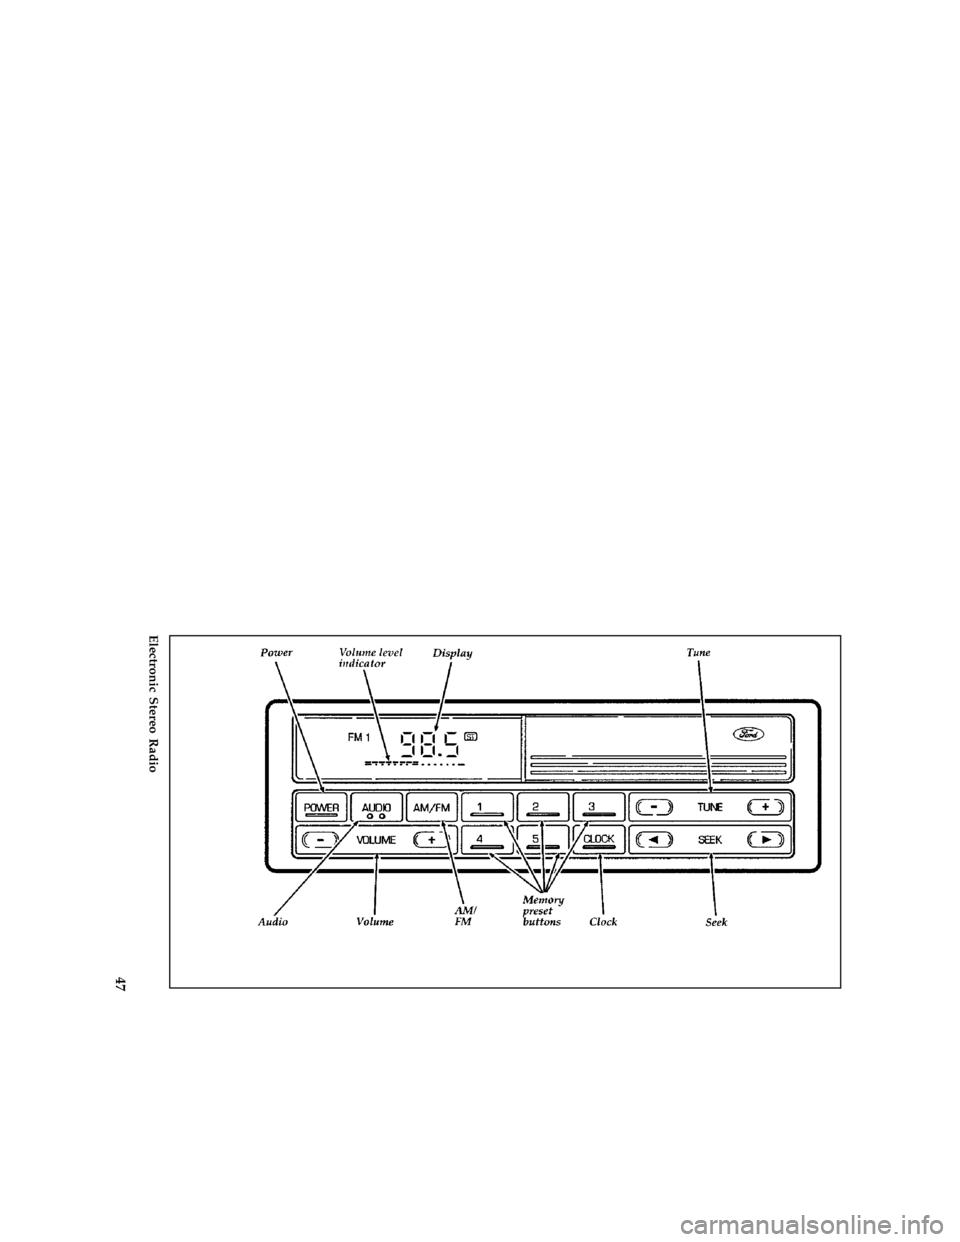 FORD AEROSTAR 1997 1.G Service Manual 47
*
[AS06550(ALL)02/96]
full page art:0060586-C
Electronic Stereo Radio
File:04cpasa.ex
Update:Fri Jun  7 14:24:14 1996 